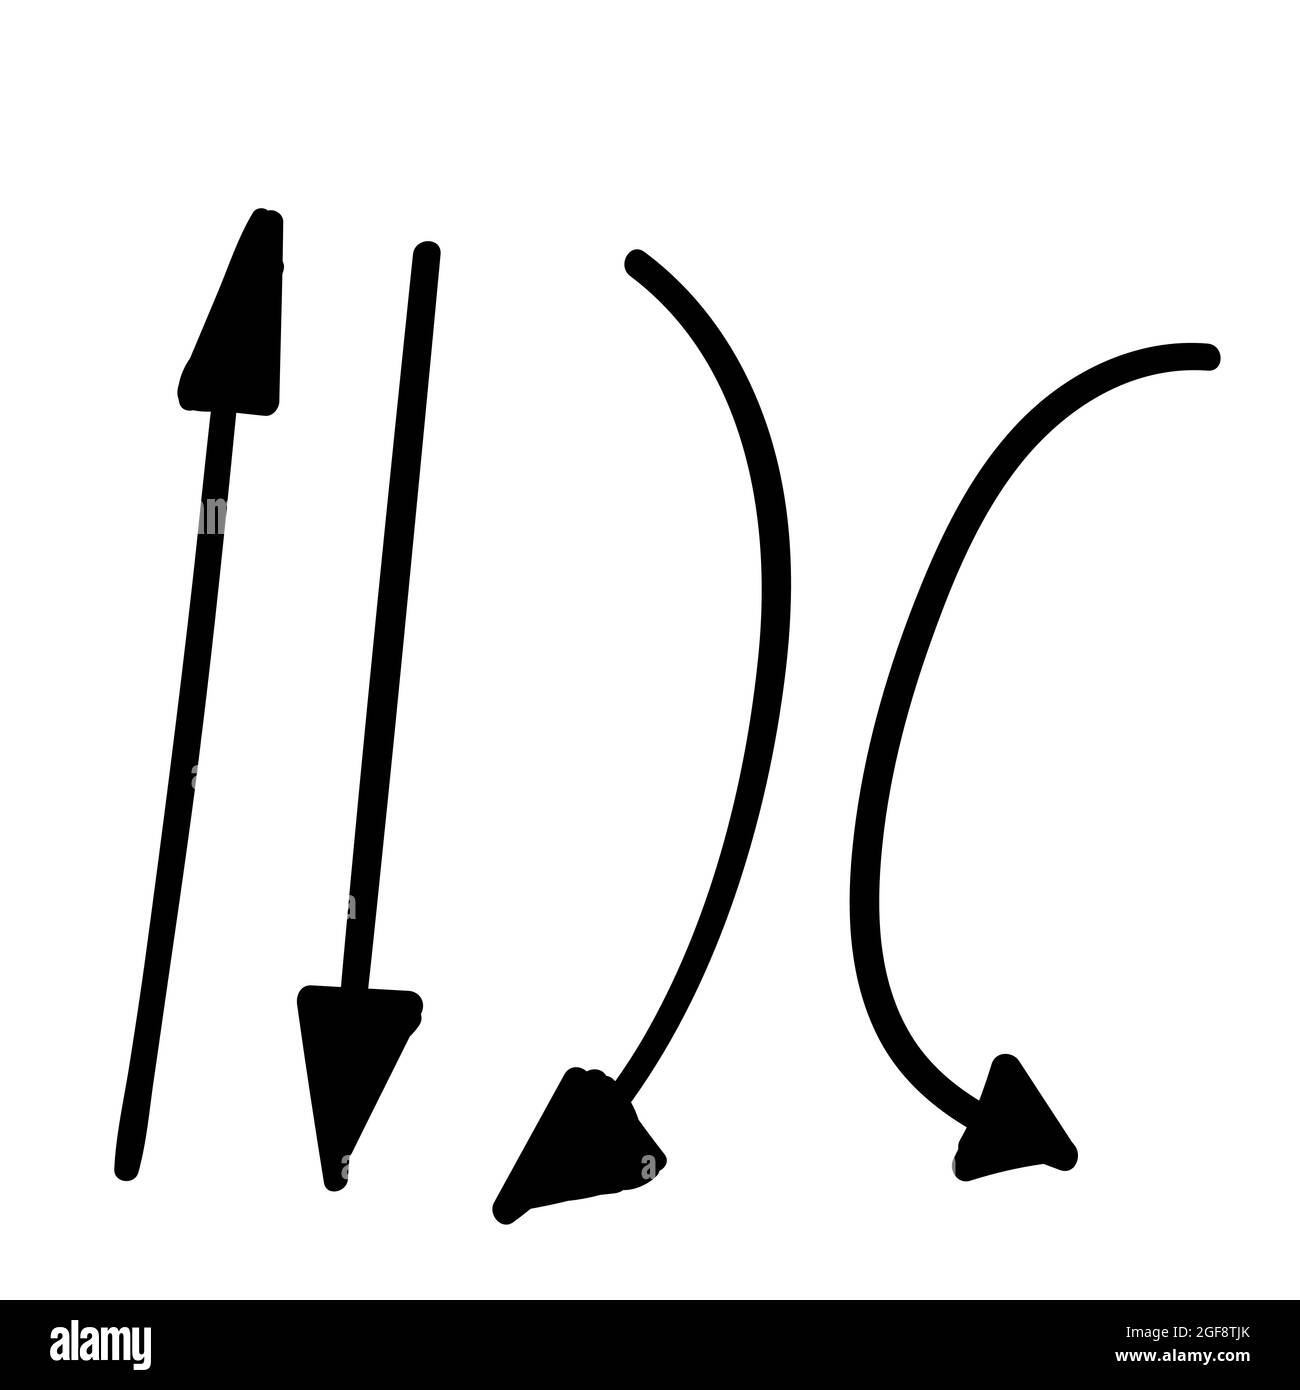 arrows handdraw set. doodle handdraw vector illustration Stock Vector